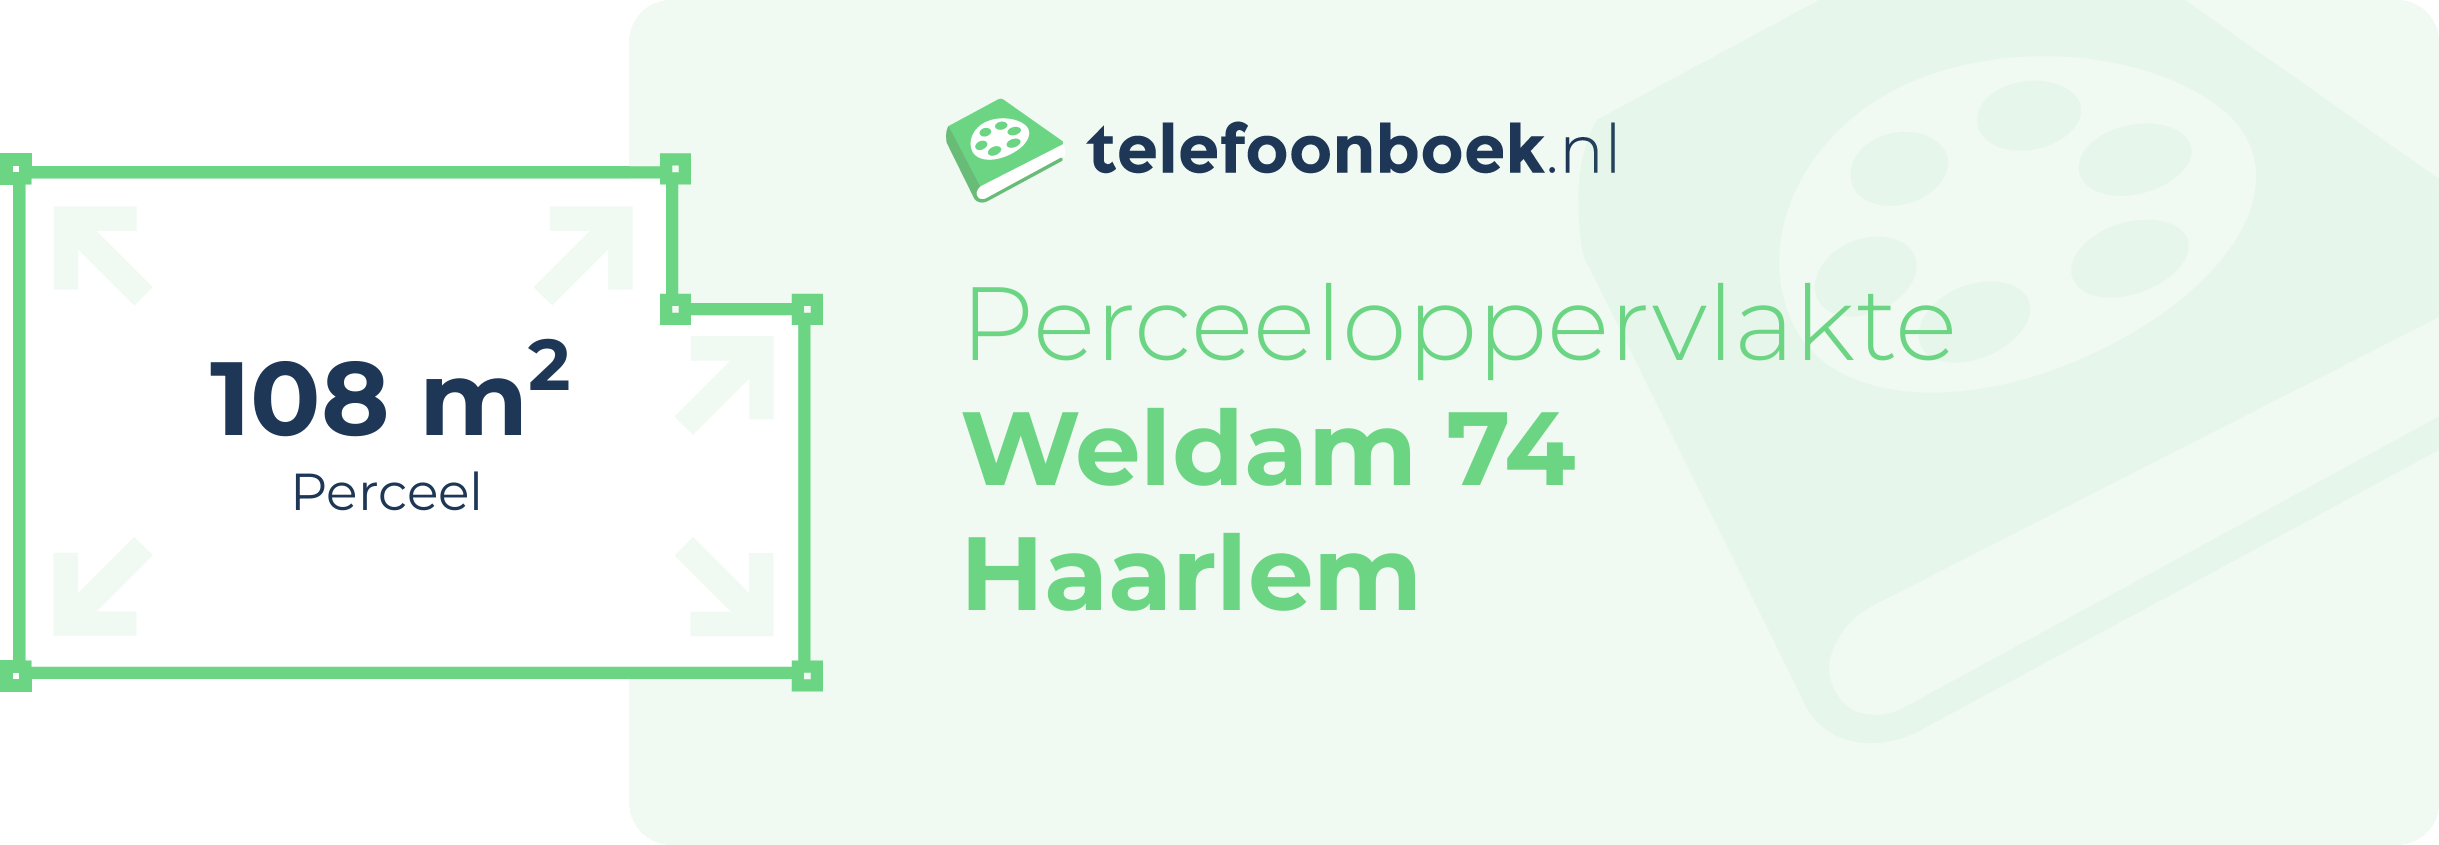 Perceeloppervlakte Weldam 74 Haarlem